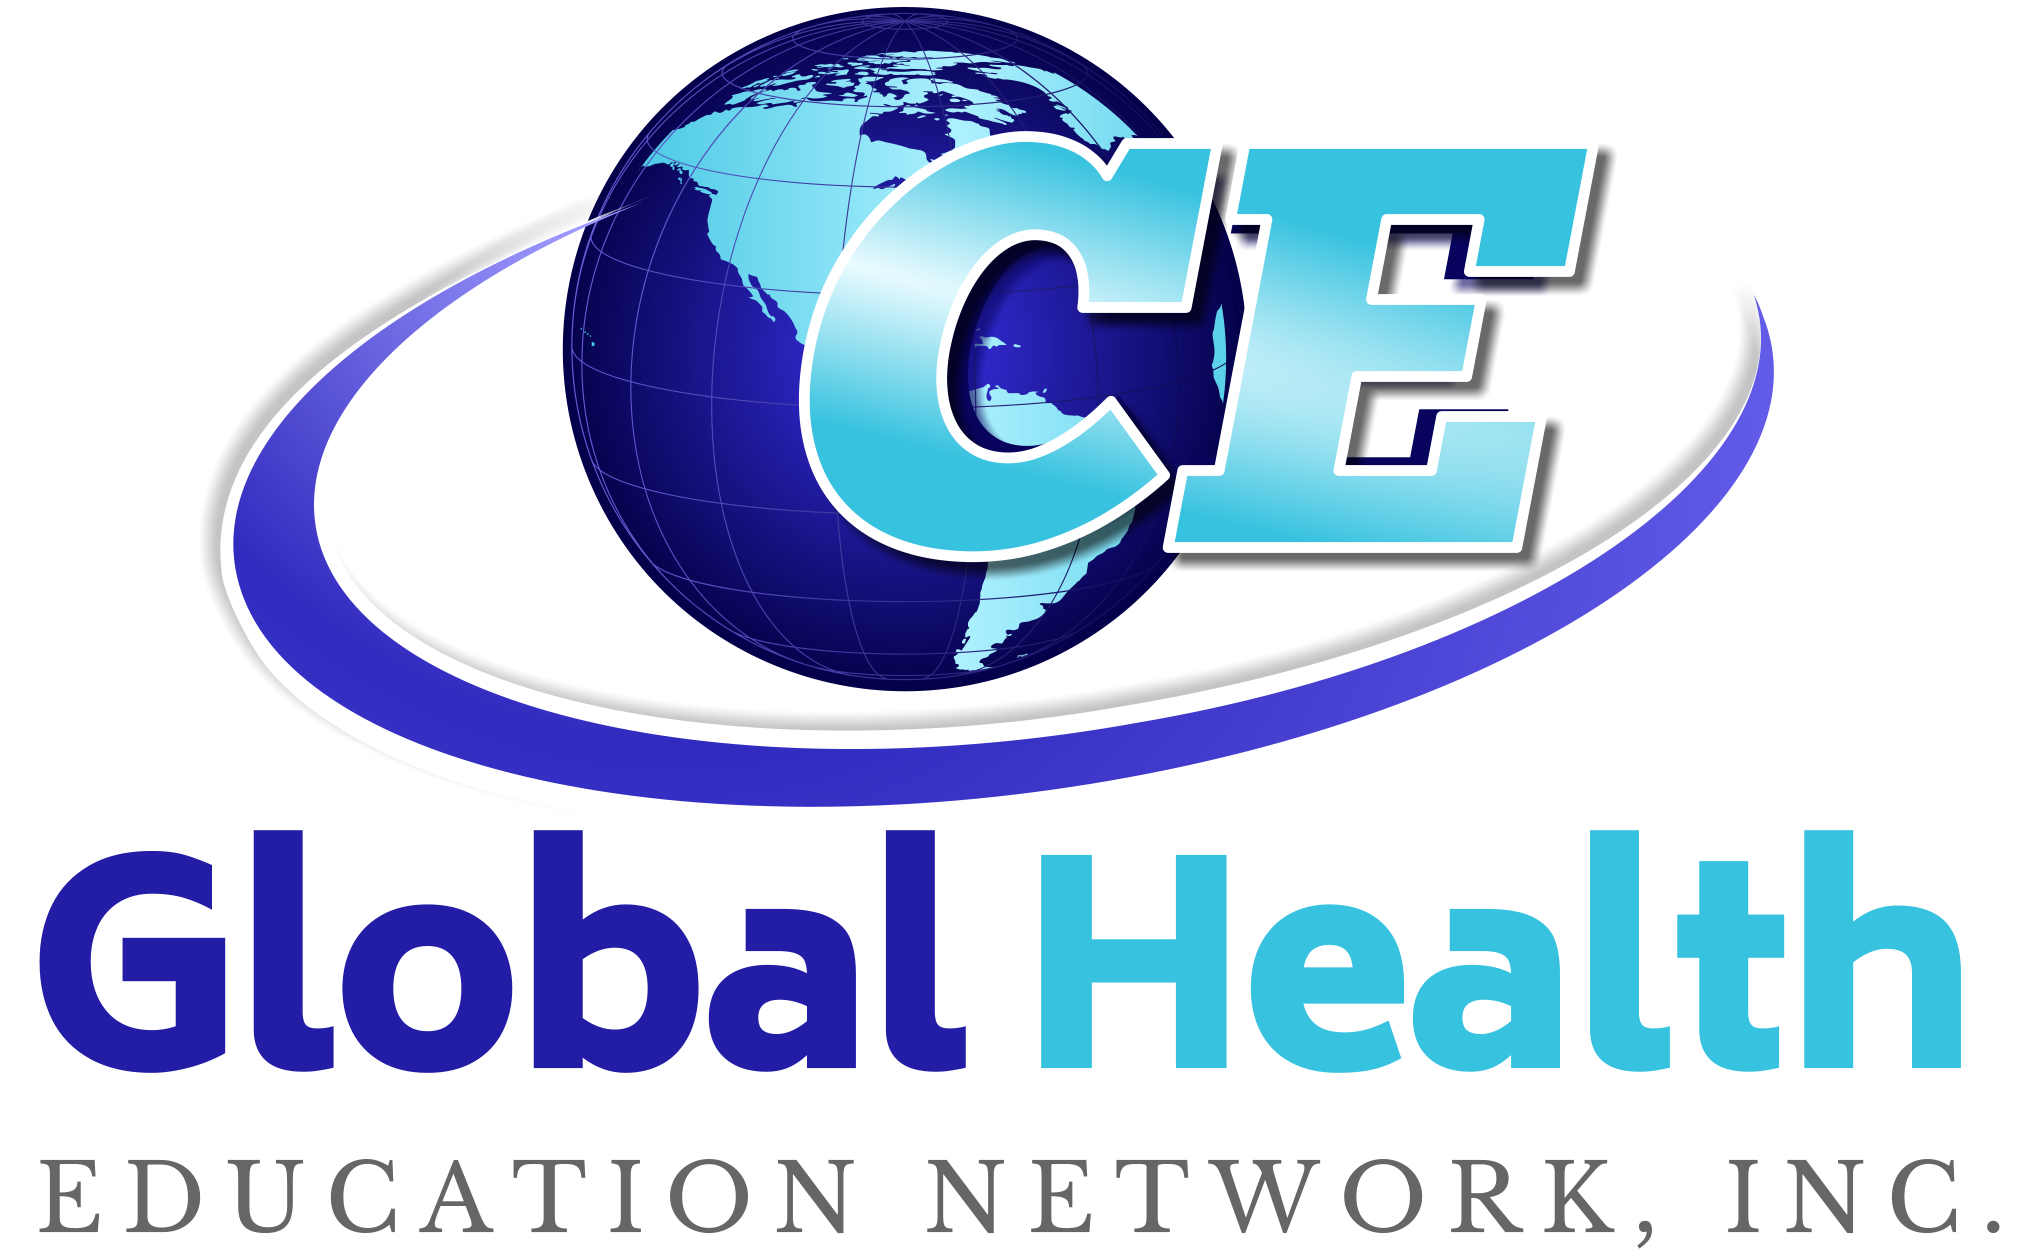 CE Global Health Education Network